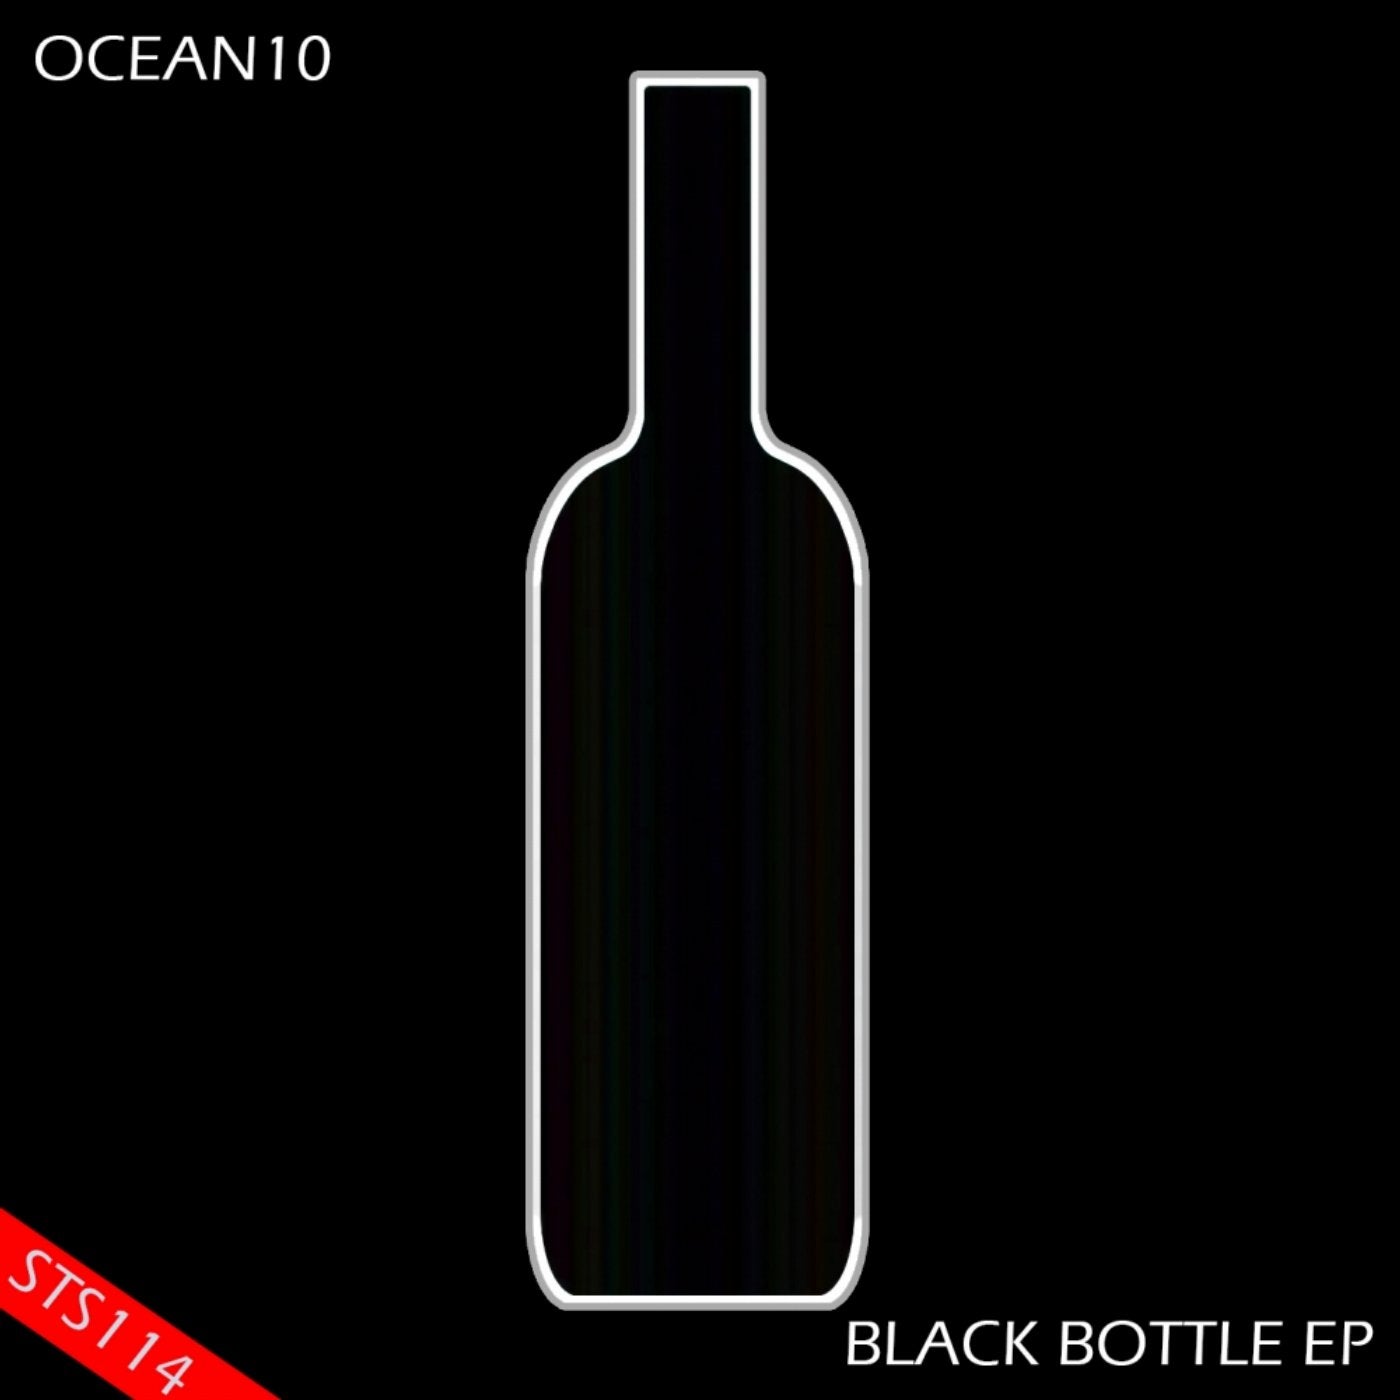 Black Bottle EP